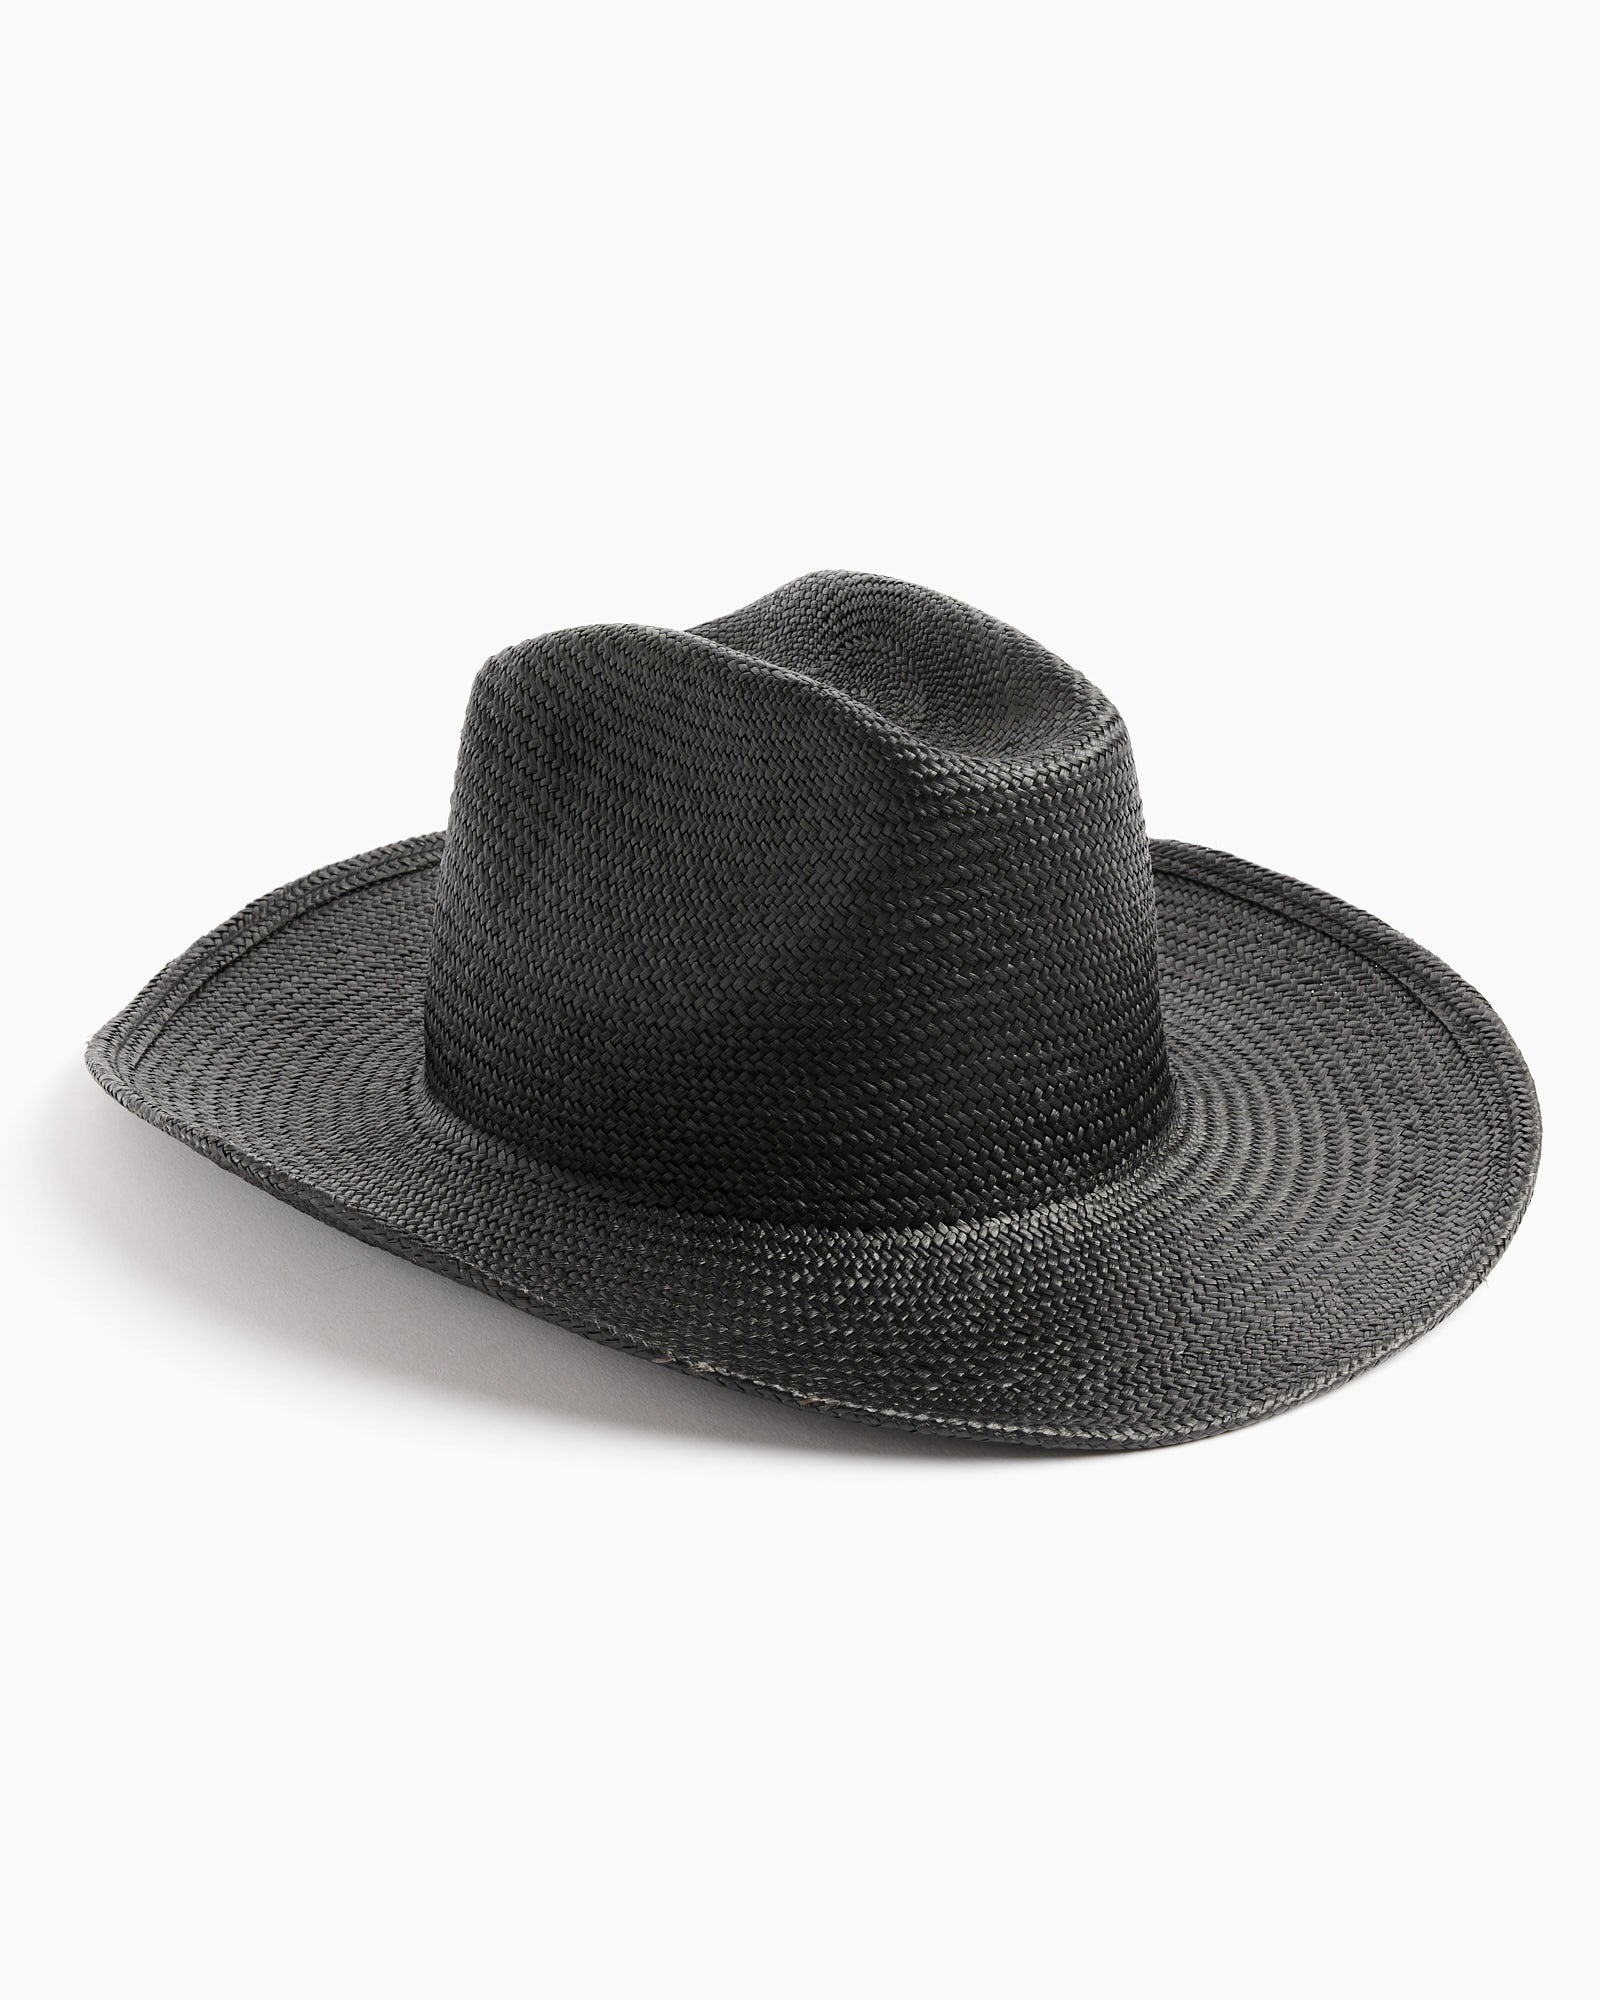 Cowboy Hat in Black